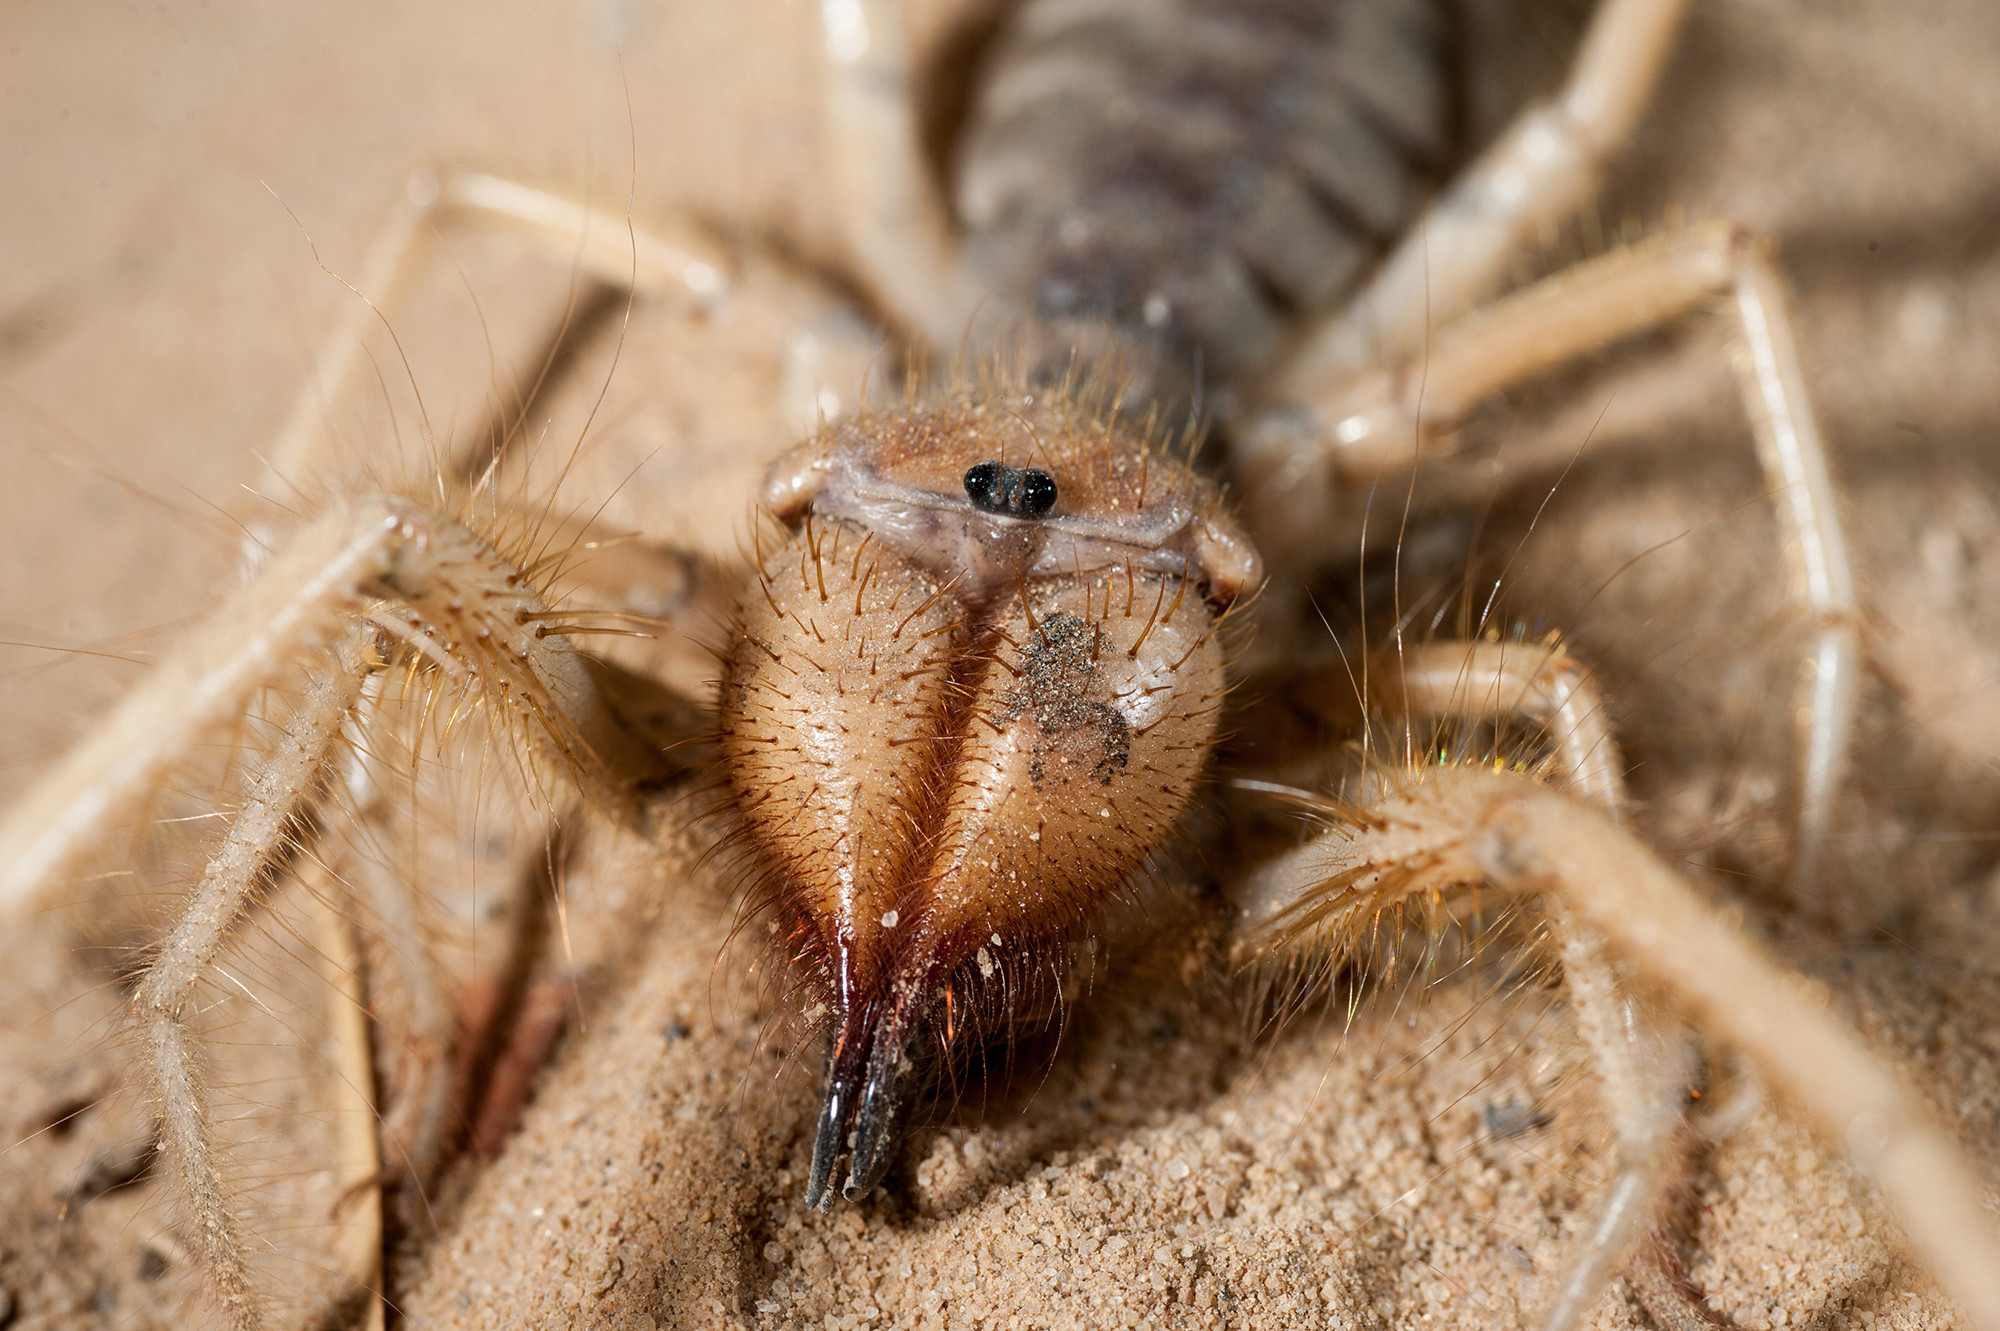 Half-spider, half-scorpion — all evil